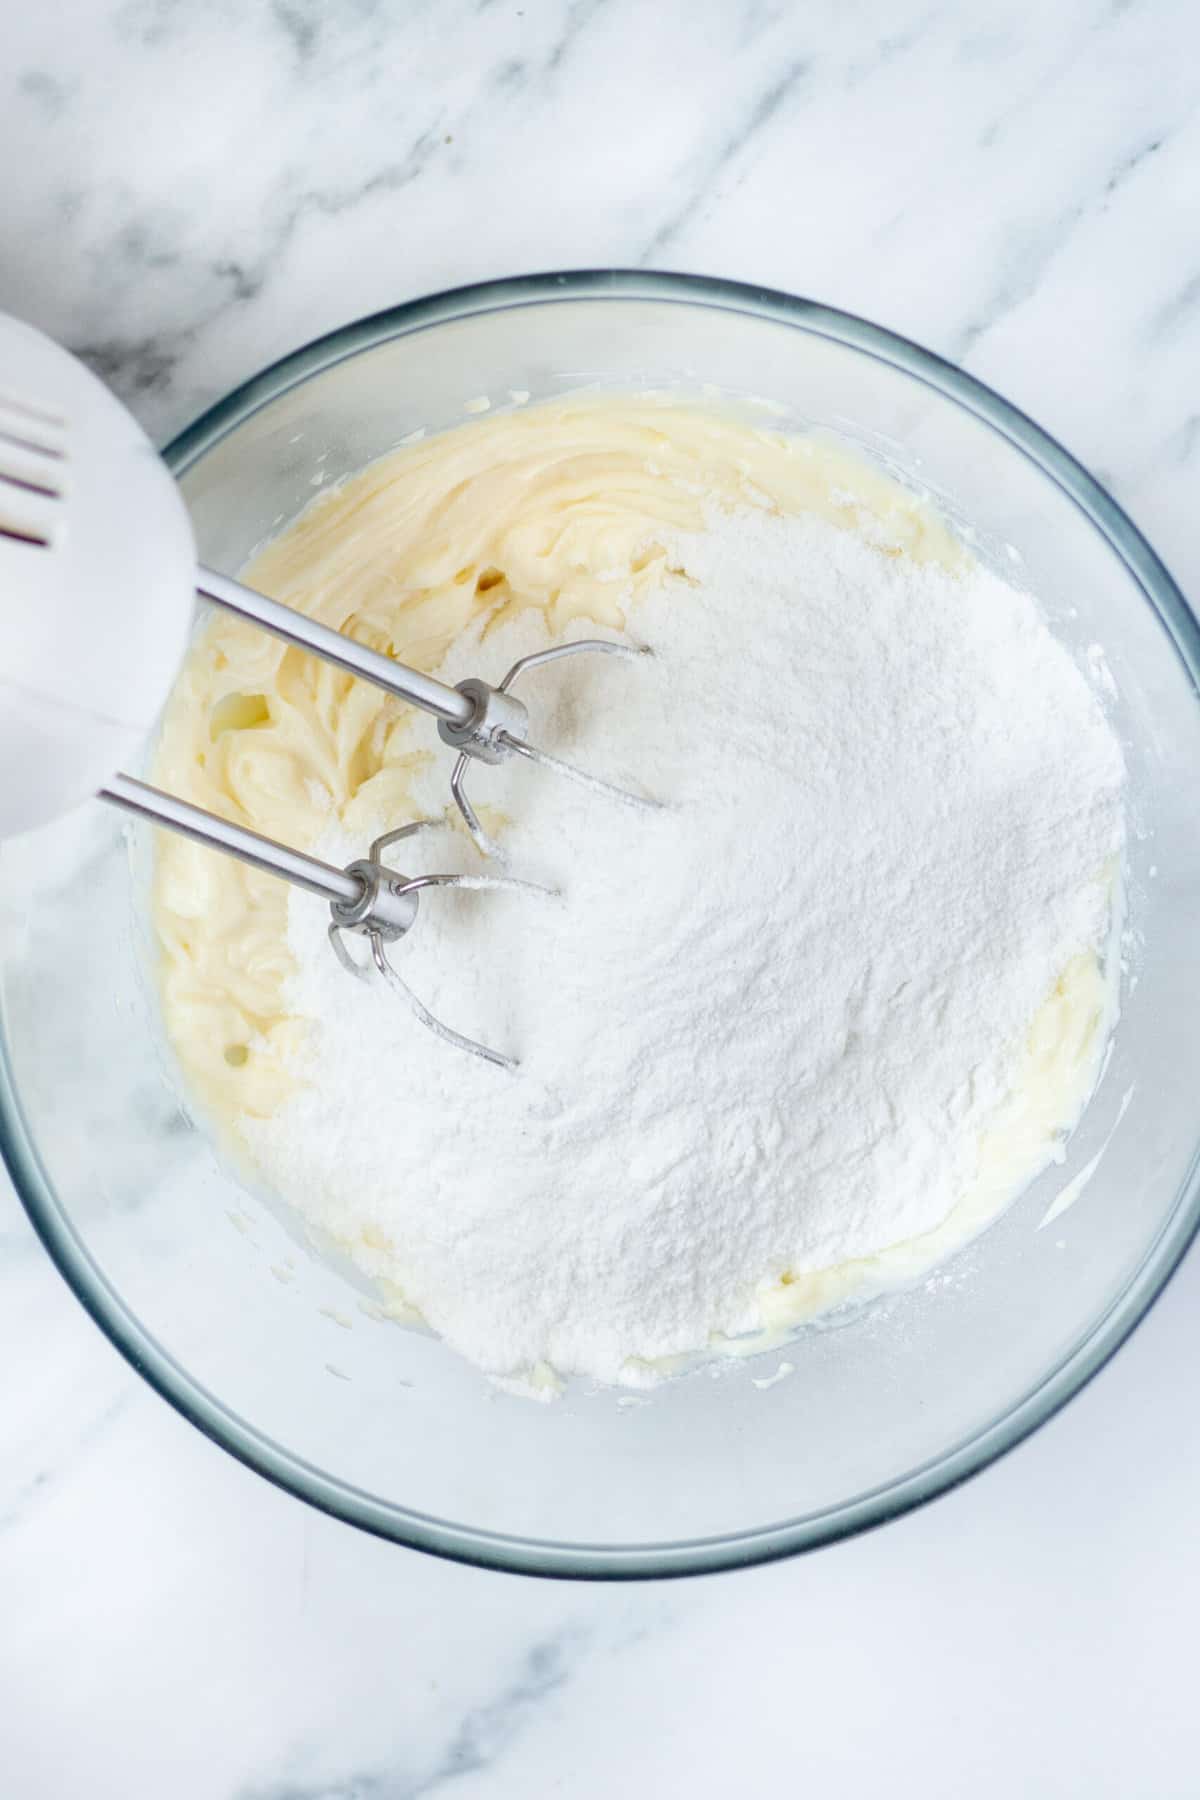 powdered sugar added to a cream cheese mixture